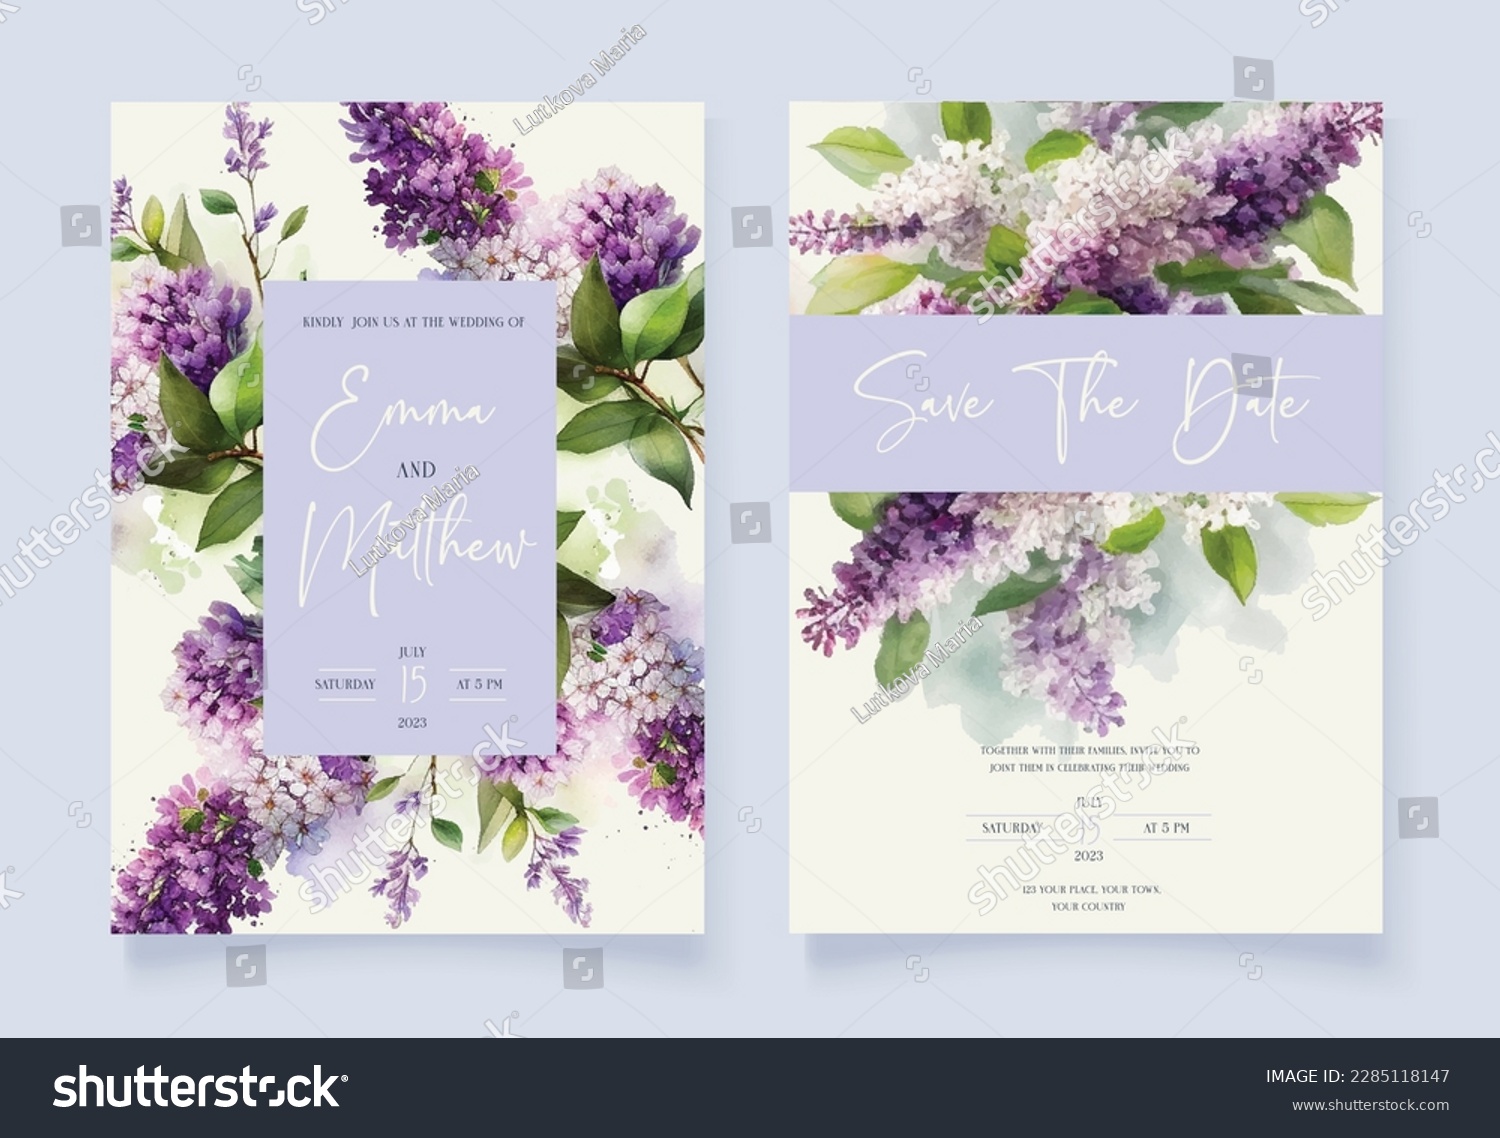 SVG of Floral Wedding invitation card. Watercolor lilac flowers. Vintage card. svg